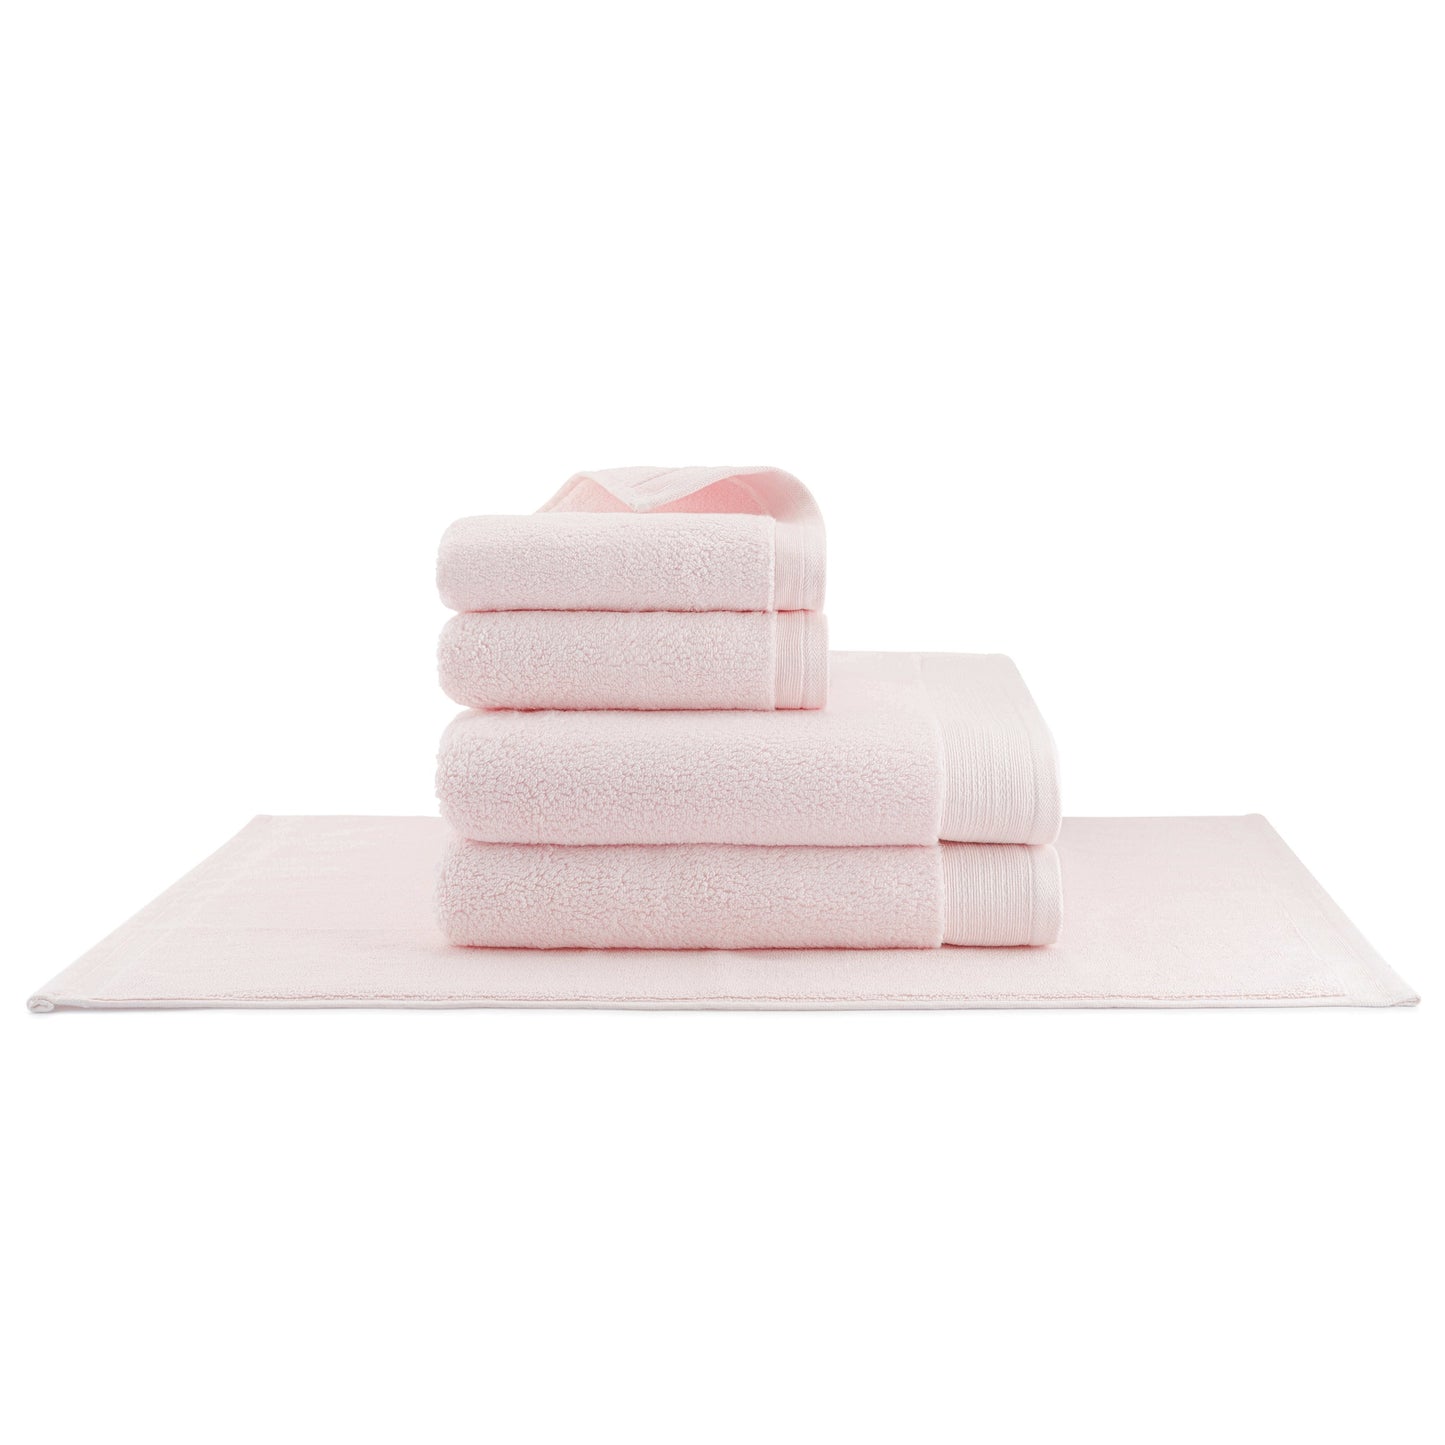 Egyptian Cotton 5 Piece Luxury Serenity Palace Plush Large Towel Set - Blush Pink